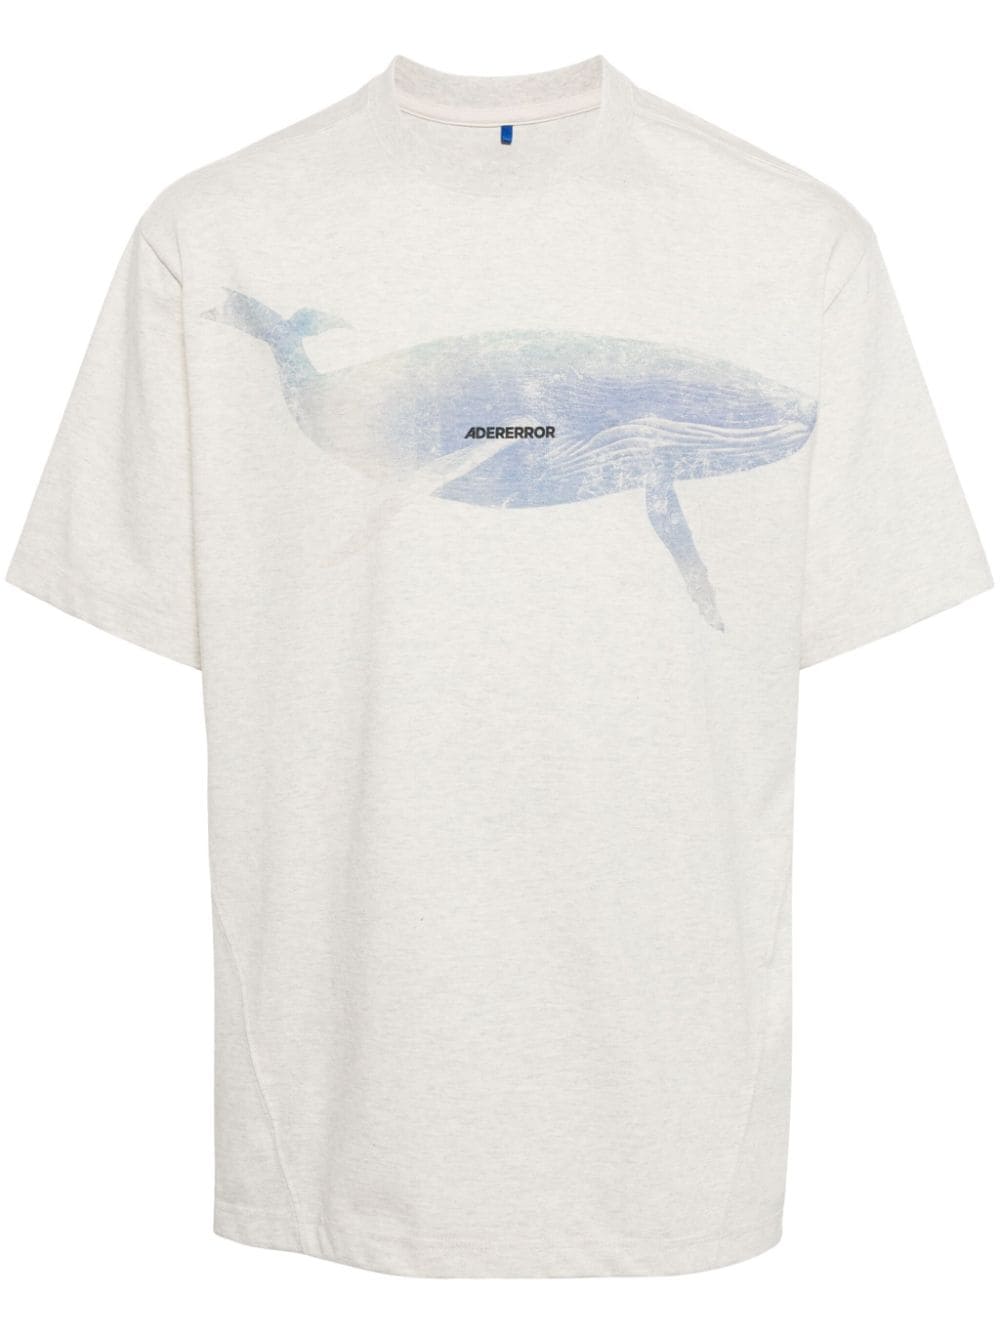 whale-print cotton T-shirt